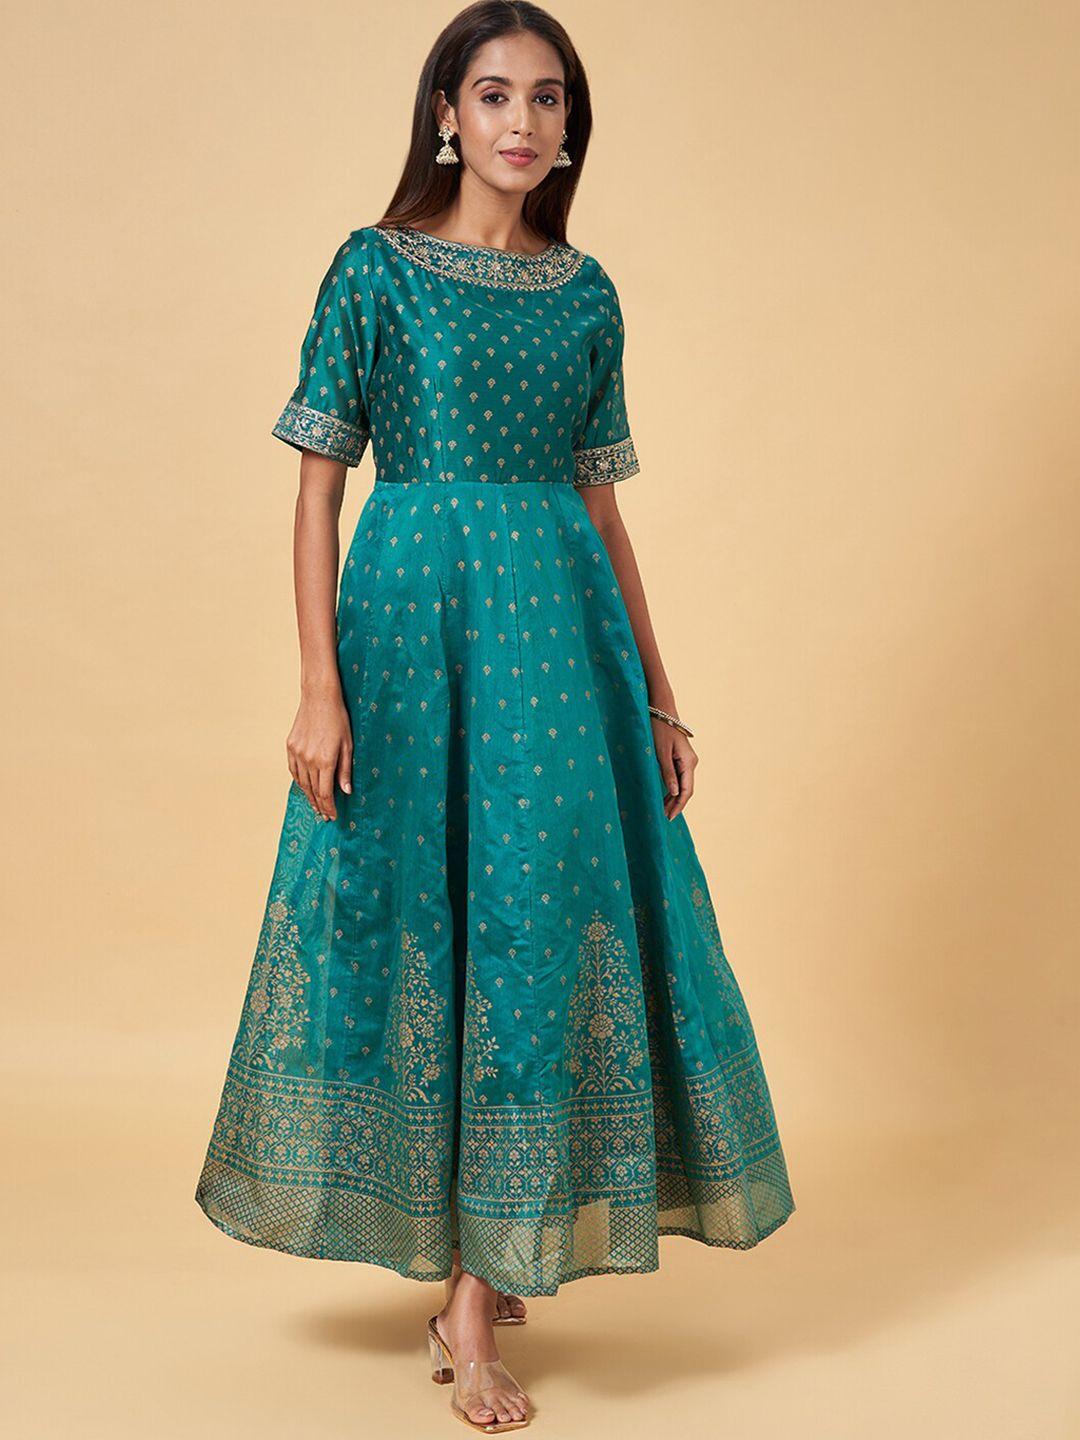 rangmanch by pantaloons turquoise blue ethnic motifs print maxi dress